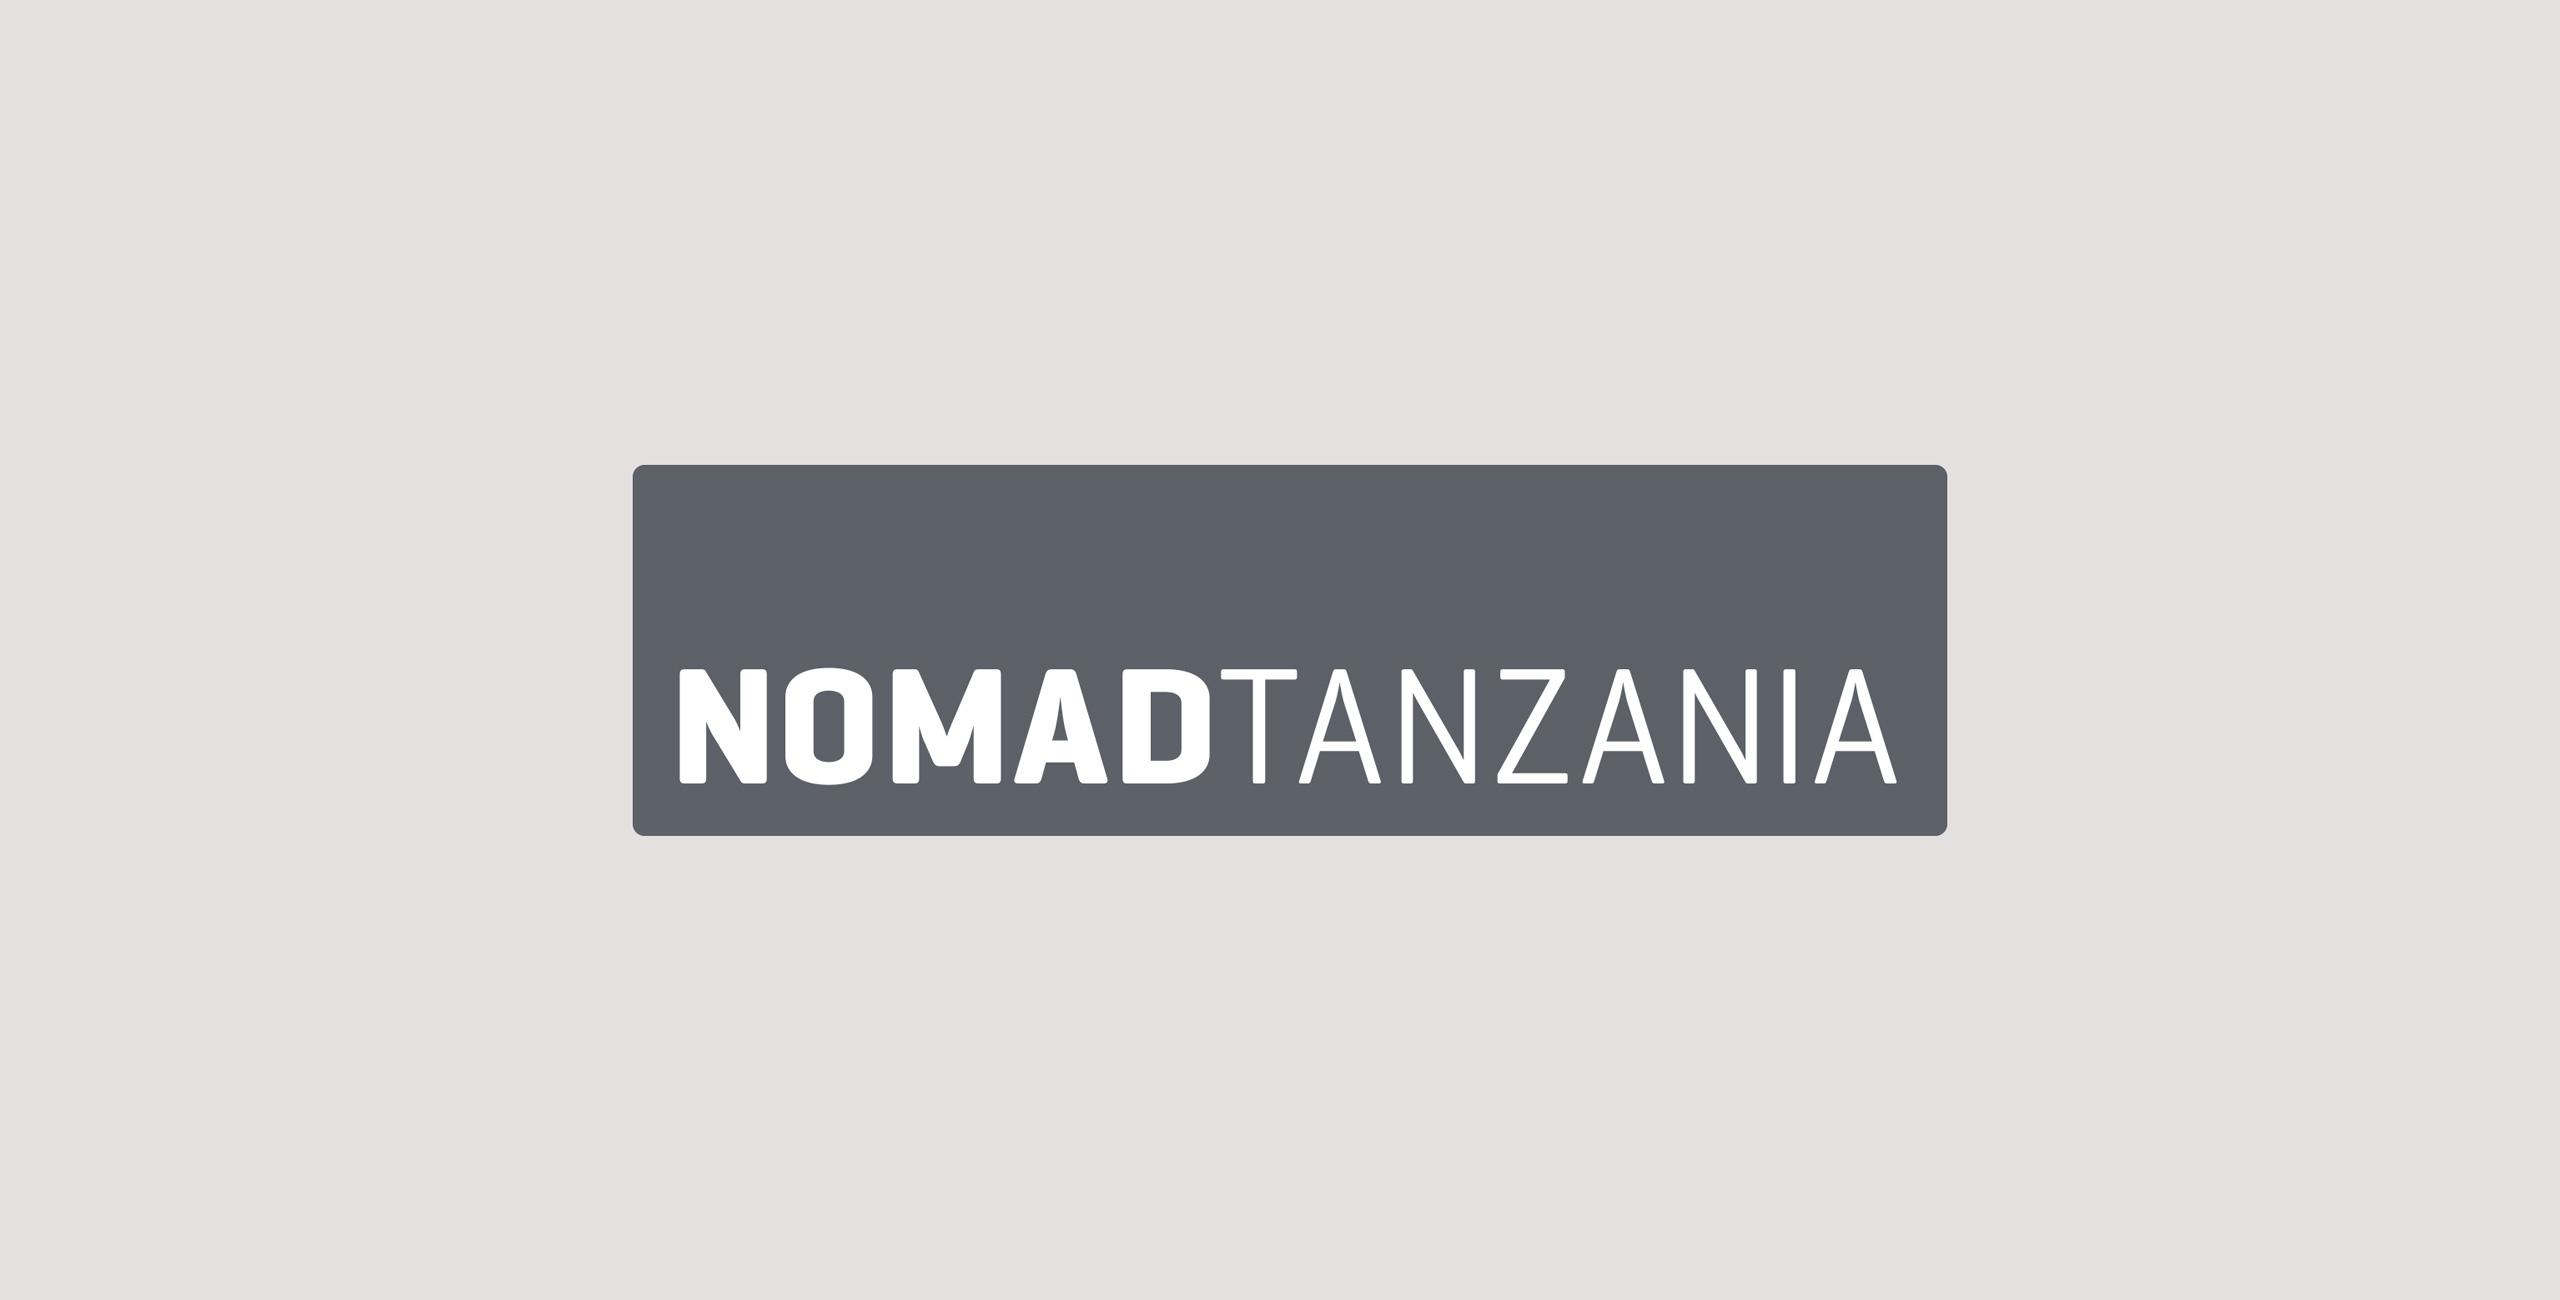 Nomad old logo